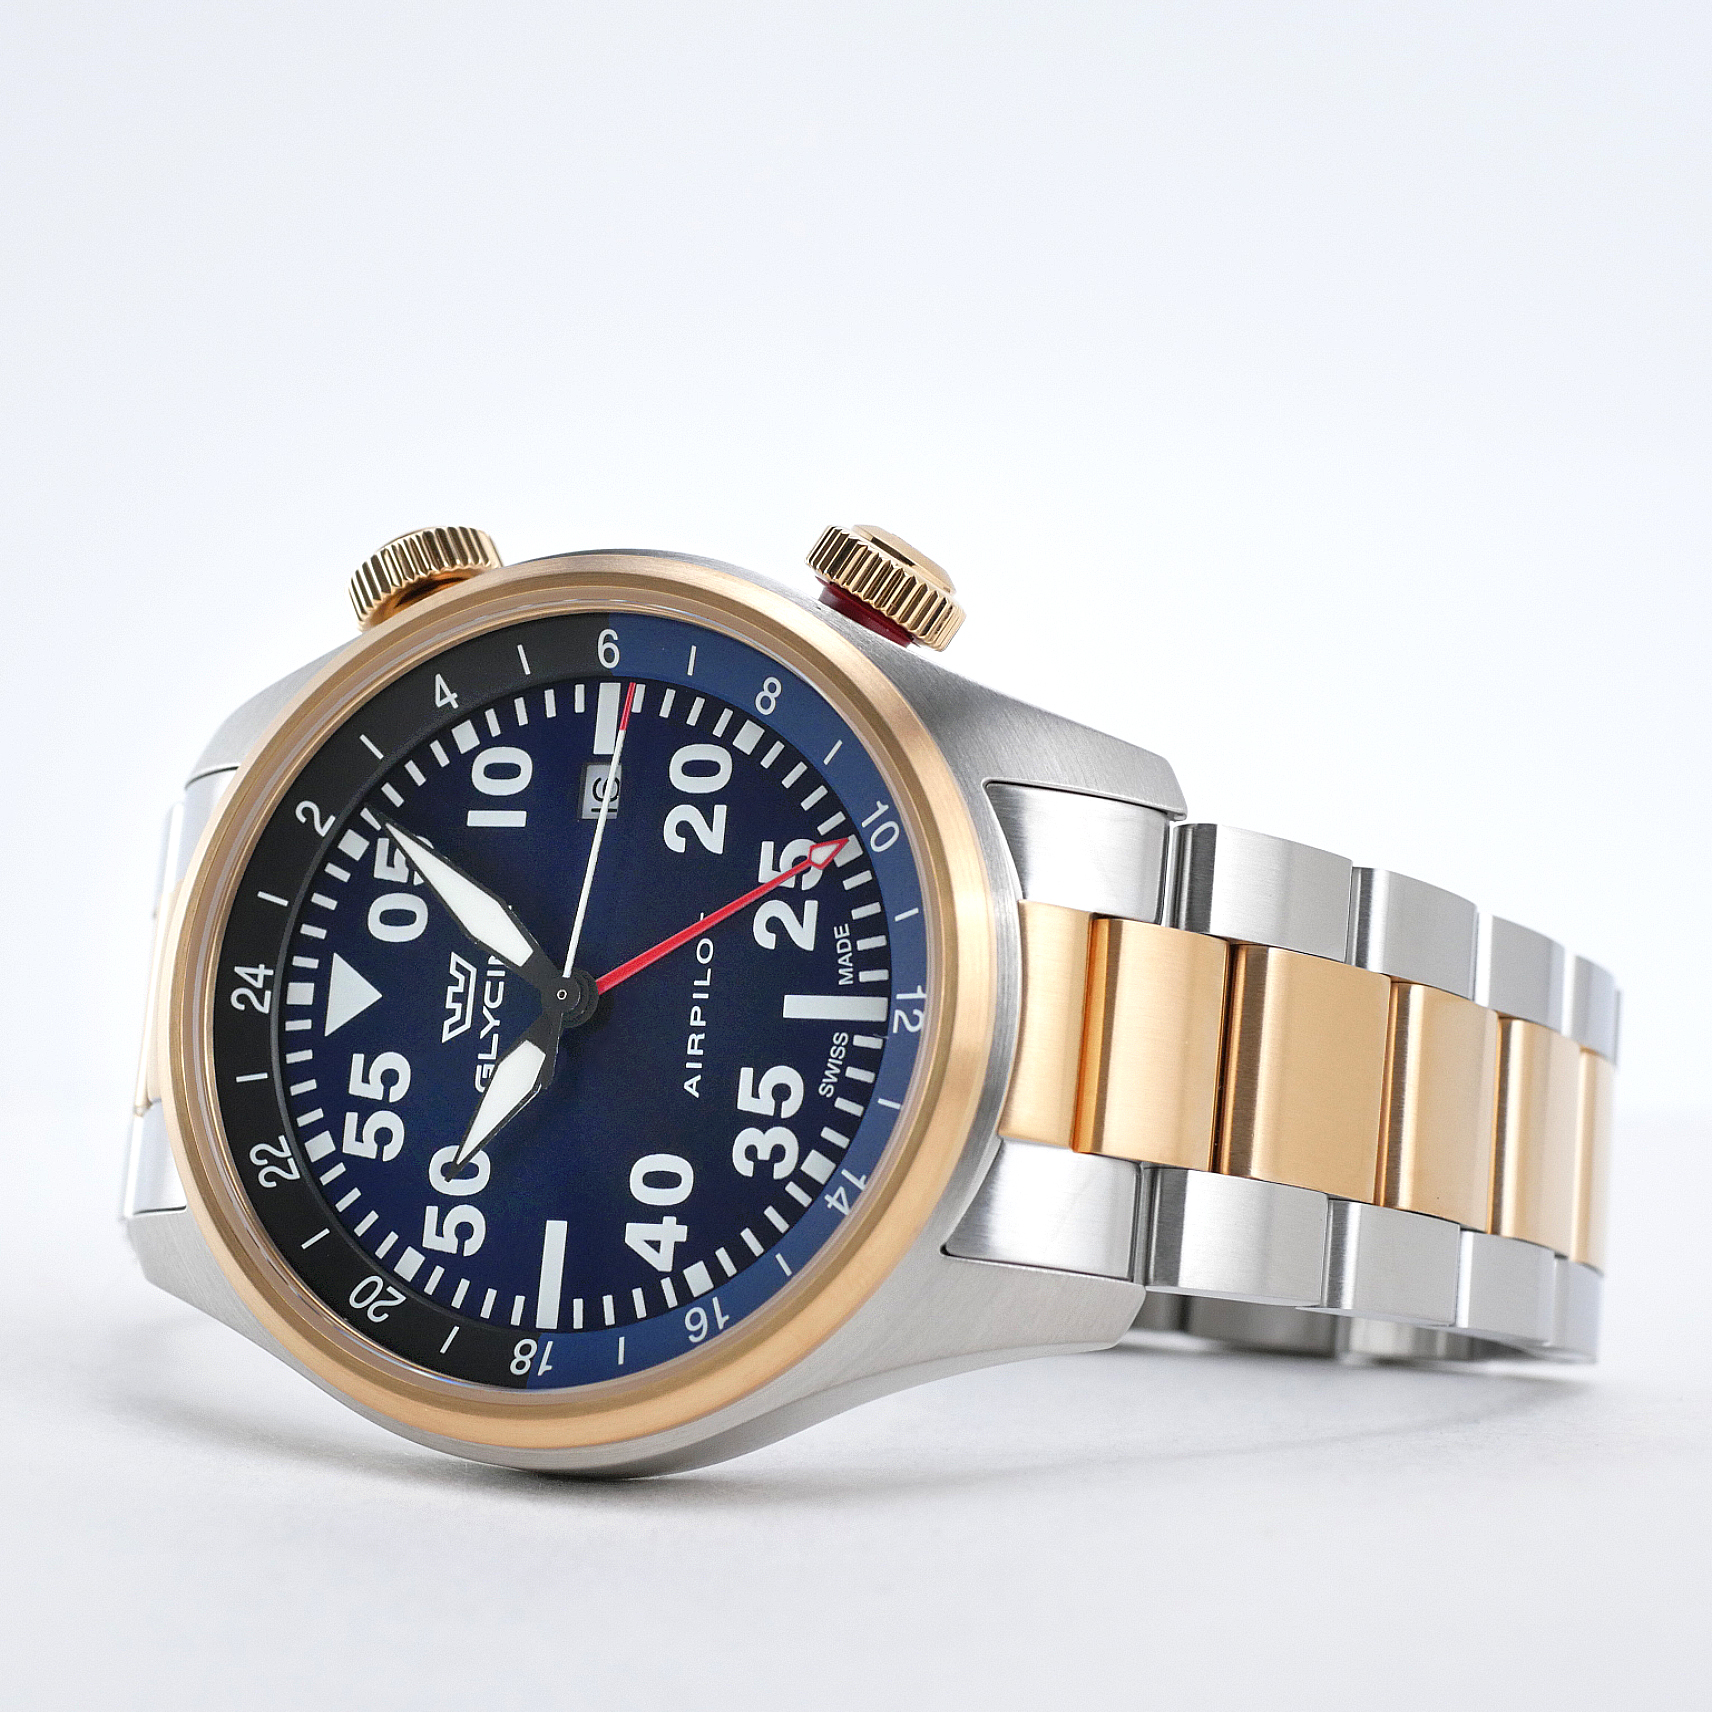 Glycine Airpilot GMT Swiss Men's Watch Blue Dial / Two-Tone GL0349